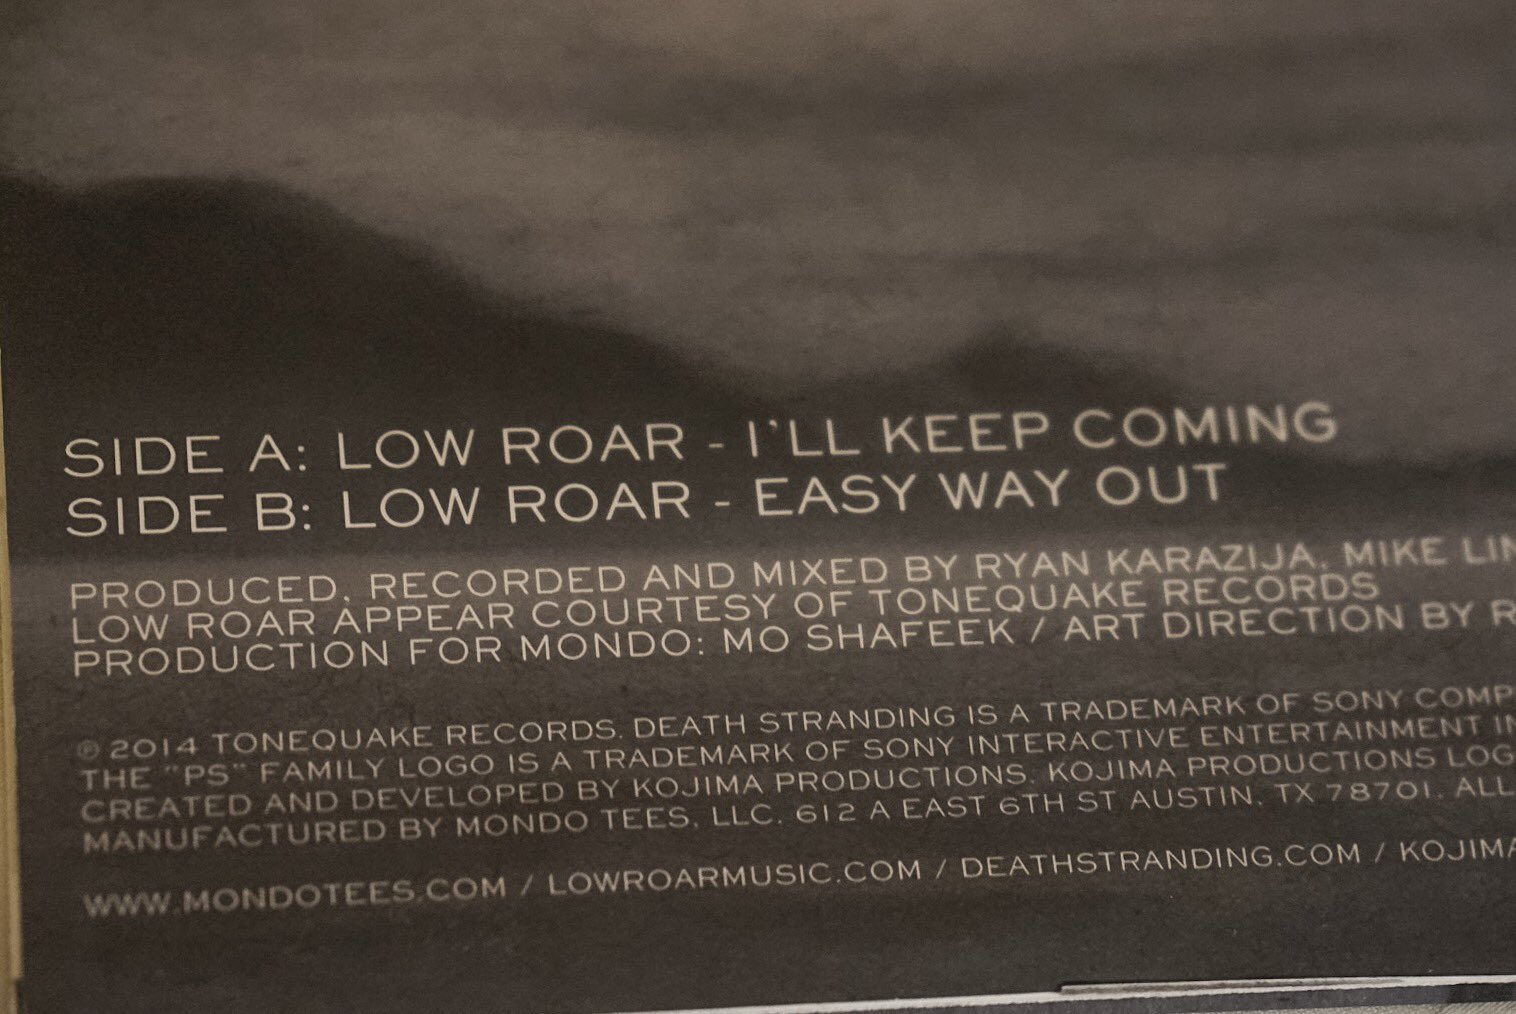 Vinyl limté de Death Stranding – Low Roar